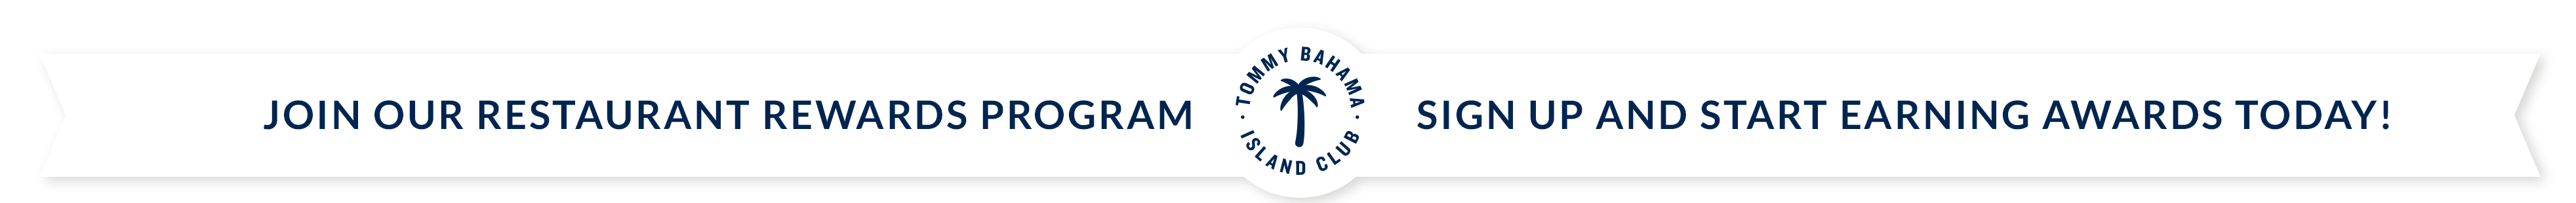 New York City Restaurant. Tommy Bahama Island Club